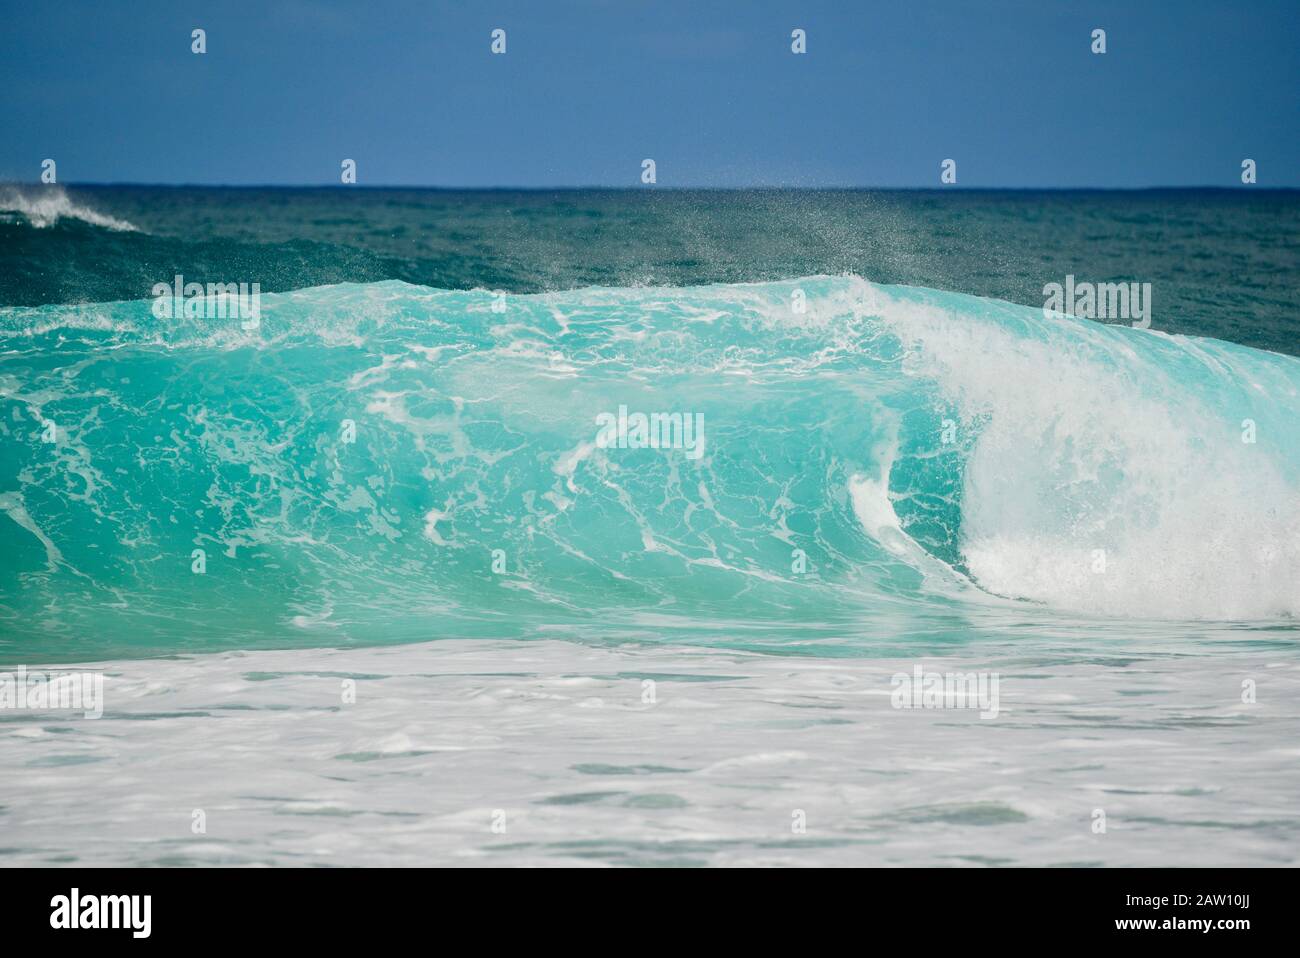 Surfers riding world-renowned crashing waves in Banzai Pipeline on North Shore, Oahu island, Haleiwa, Hawaii, USA Stock Photo